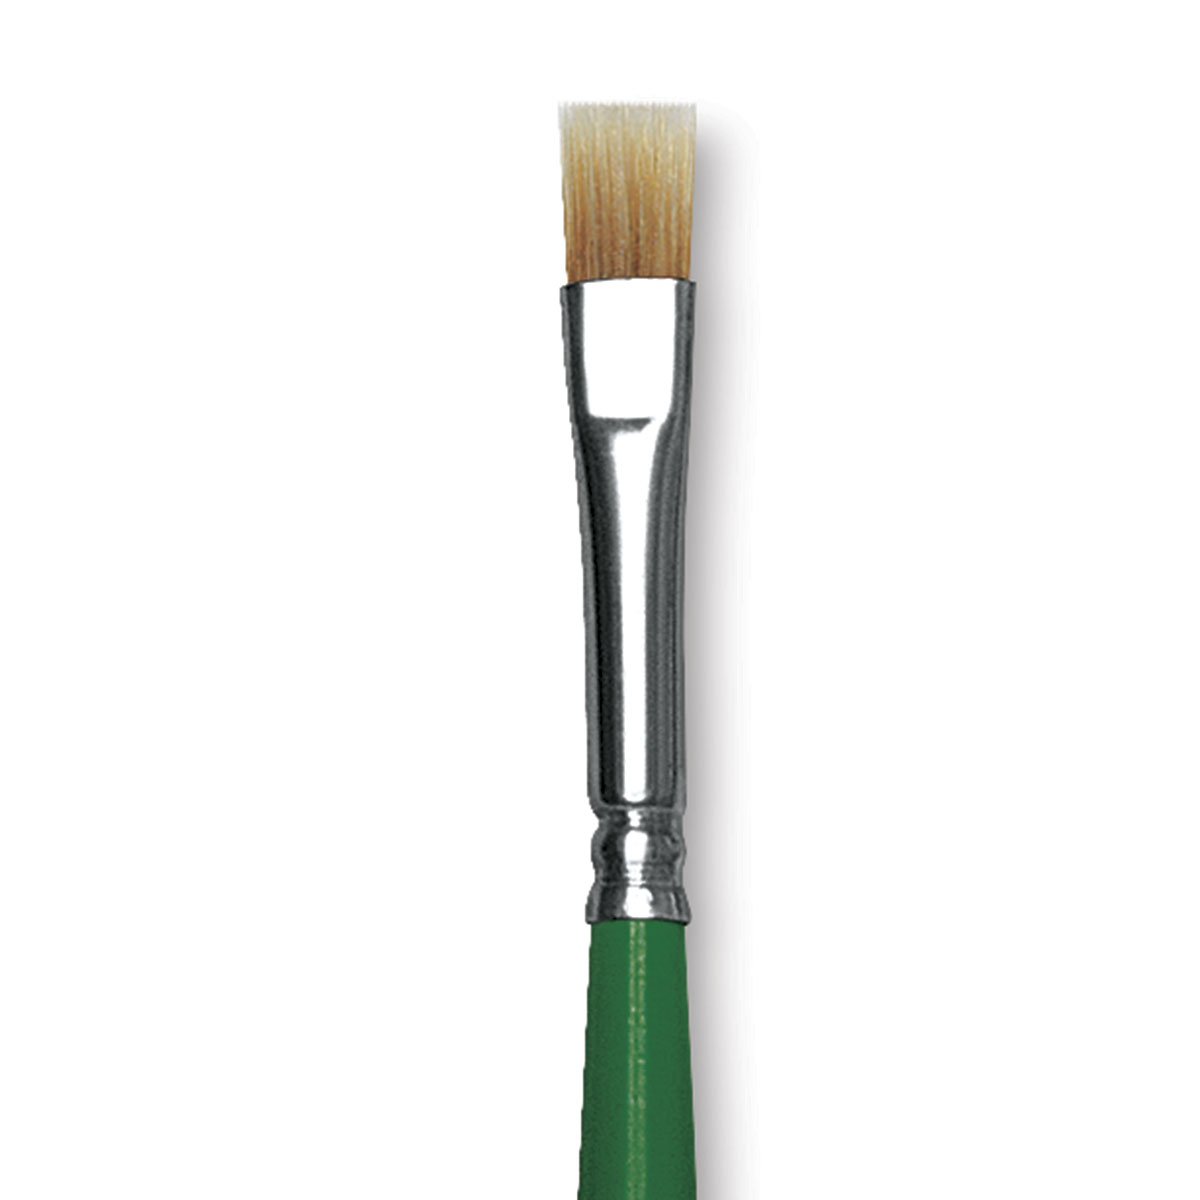 Blick Essentials Value Brush Set - Round Brushes, Brown Nylon, Set of 12